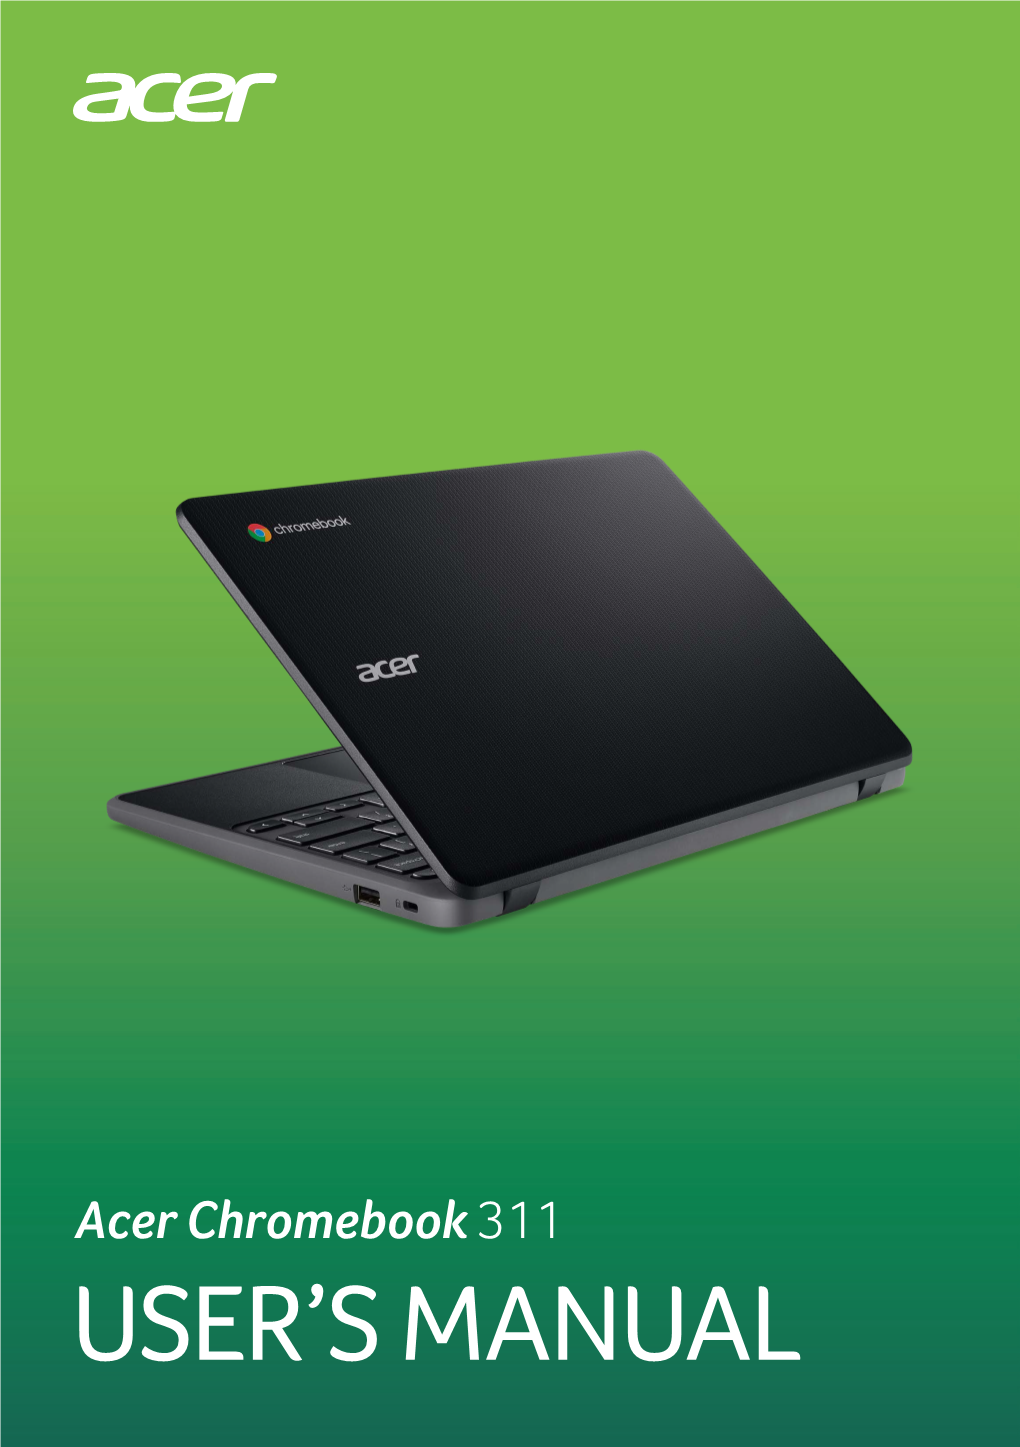 Acer Chromebook 311 USER’S MANUAL 2